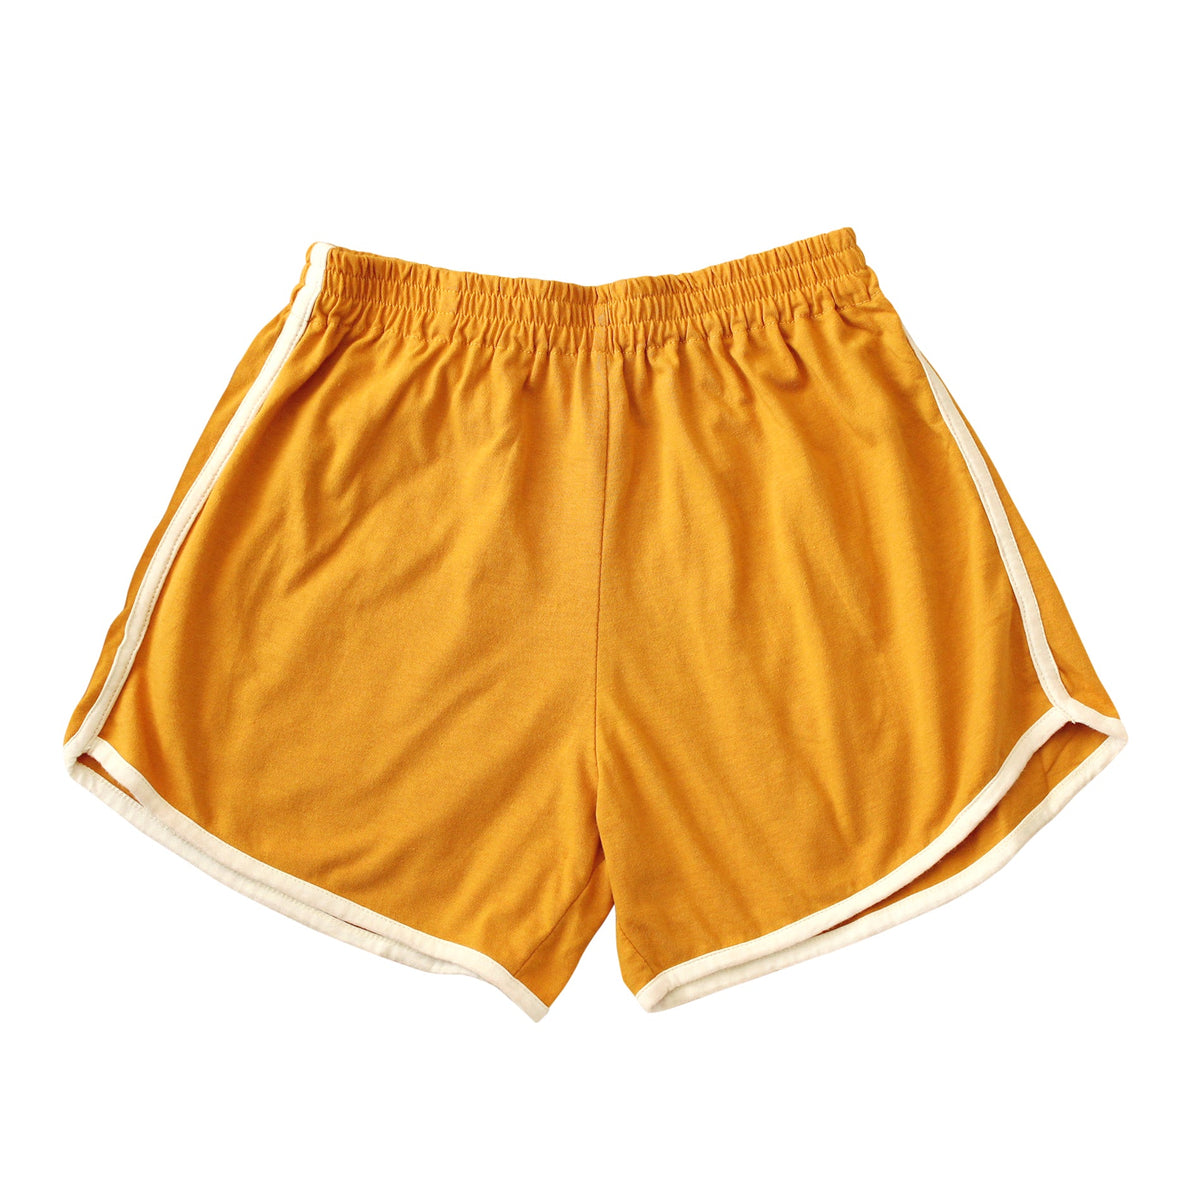 GIRL Seaside Runner Recycled Shorts, in Sunflower Yellow by BrunnaCo